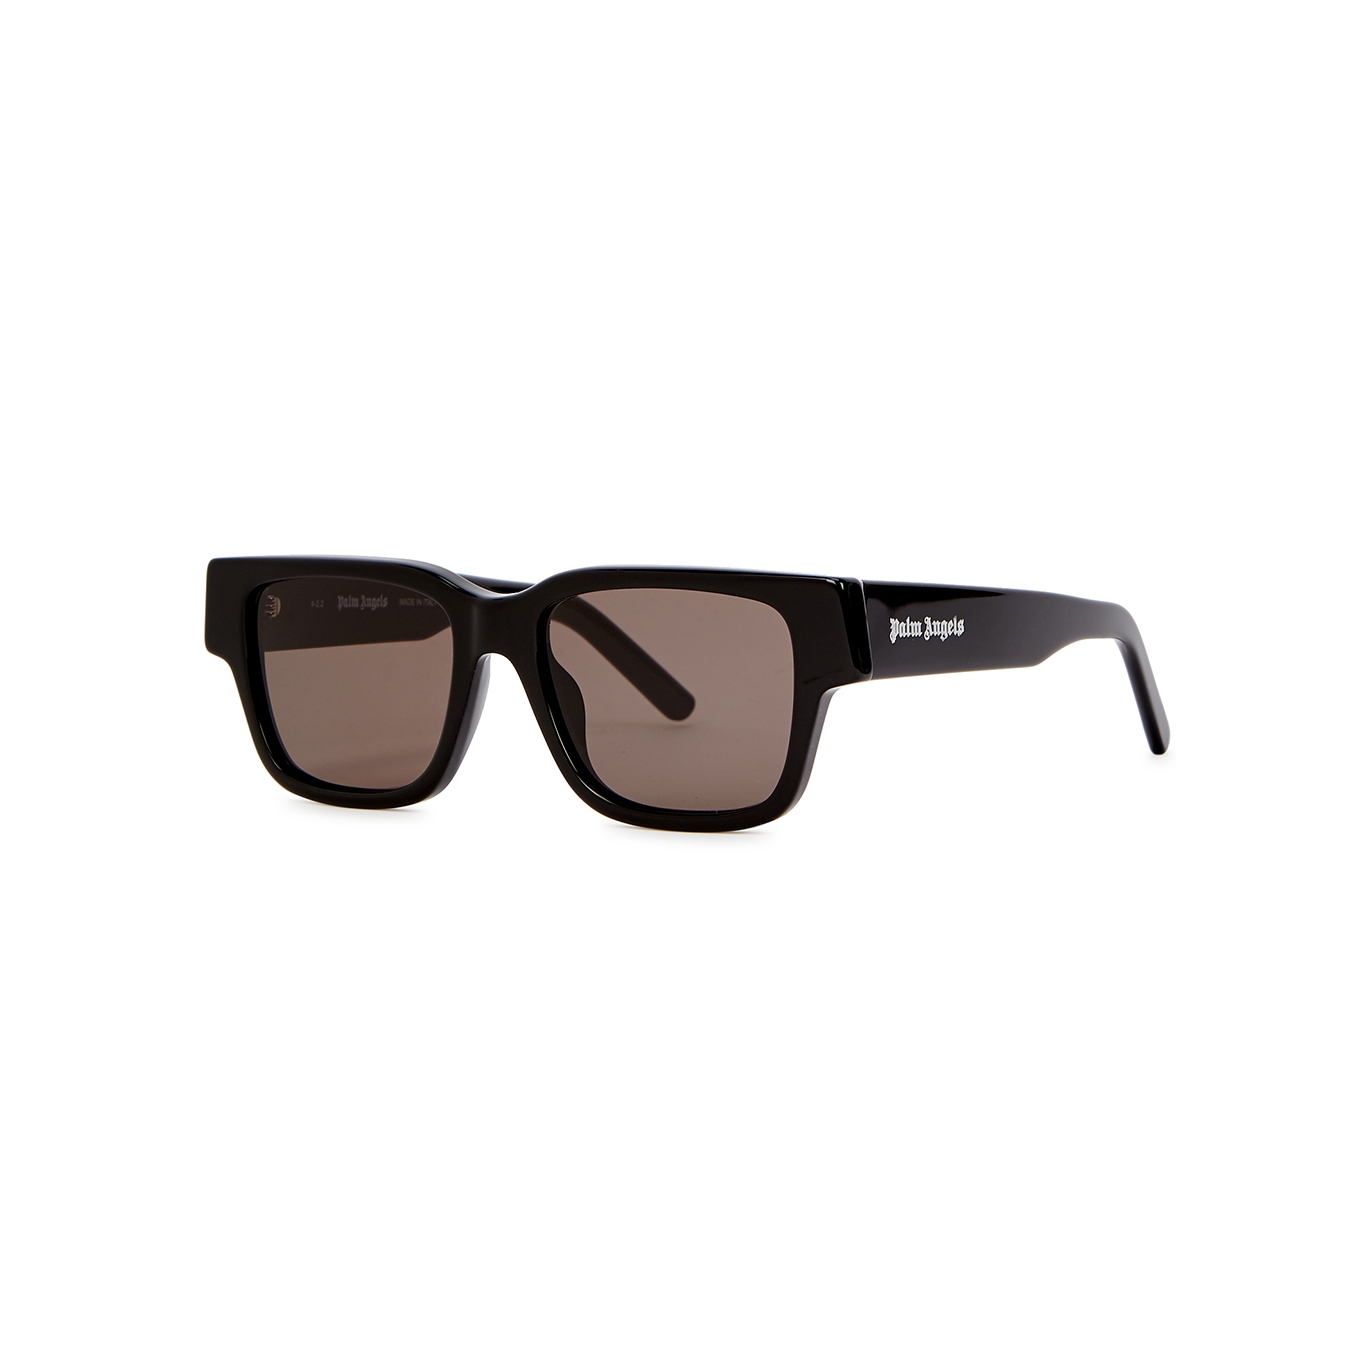 Palm Angels Newport Square-frame Sunglasses, Sunglasses, Black Lenses